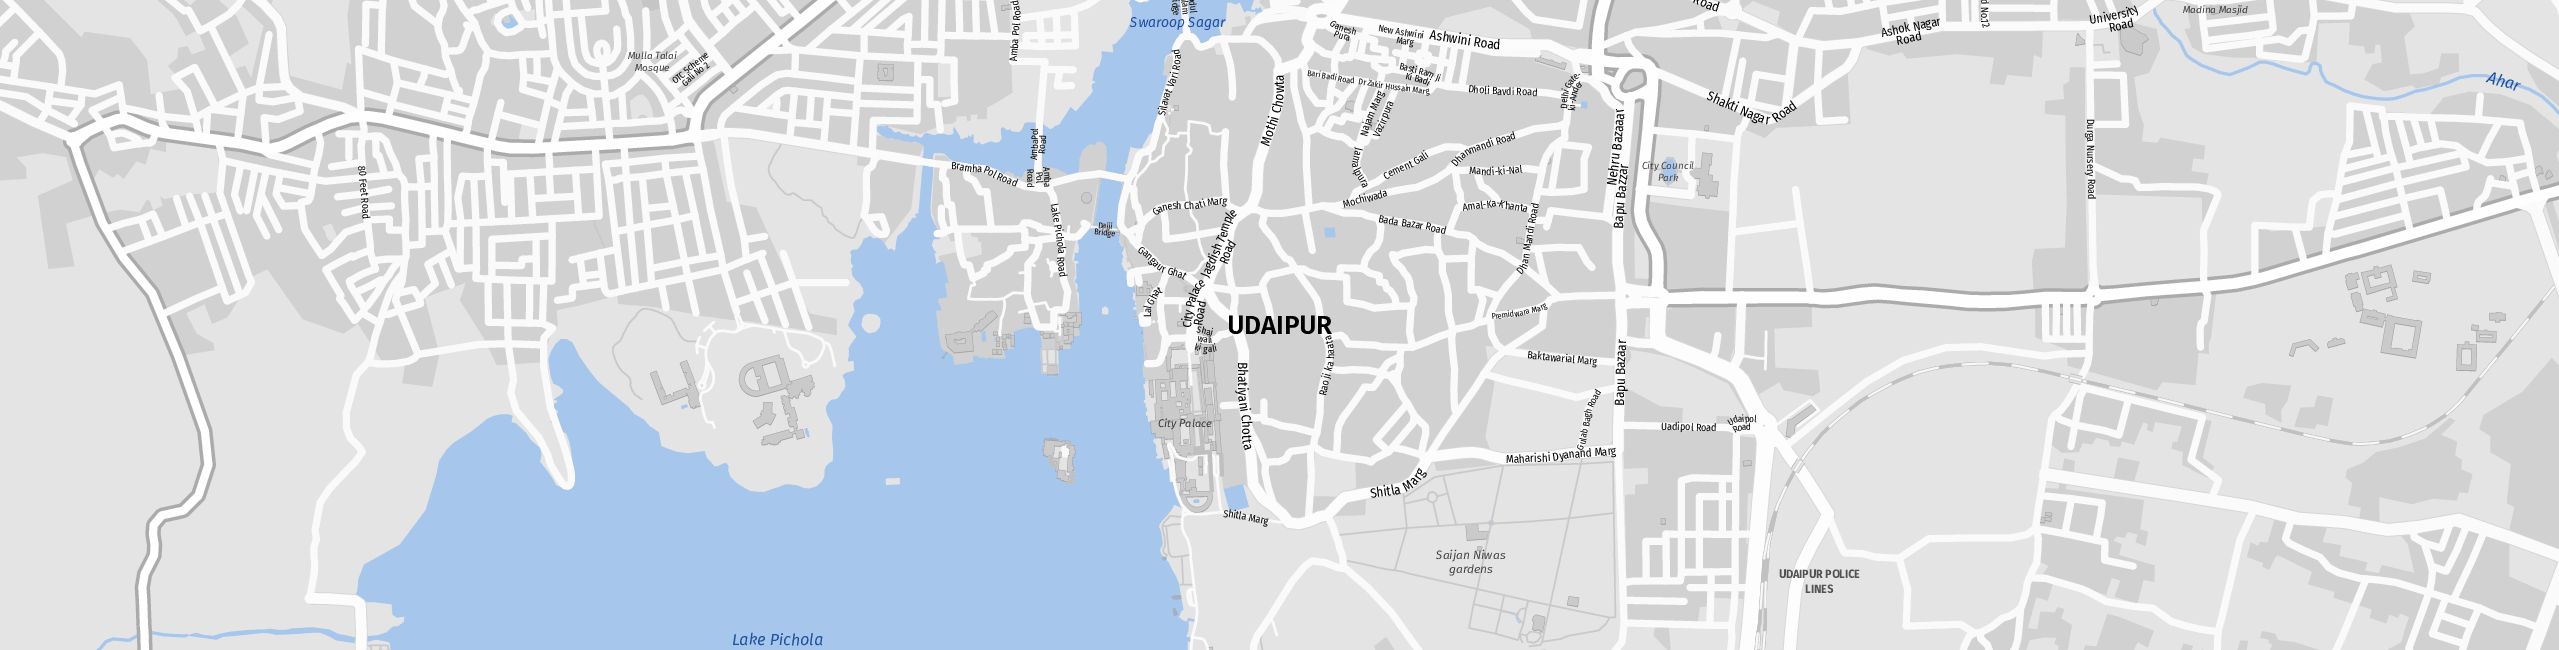 Stadtplan Udaipur zum Downloaden.